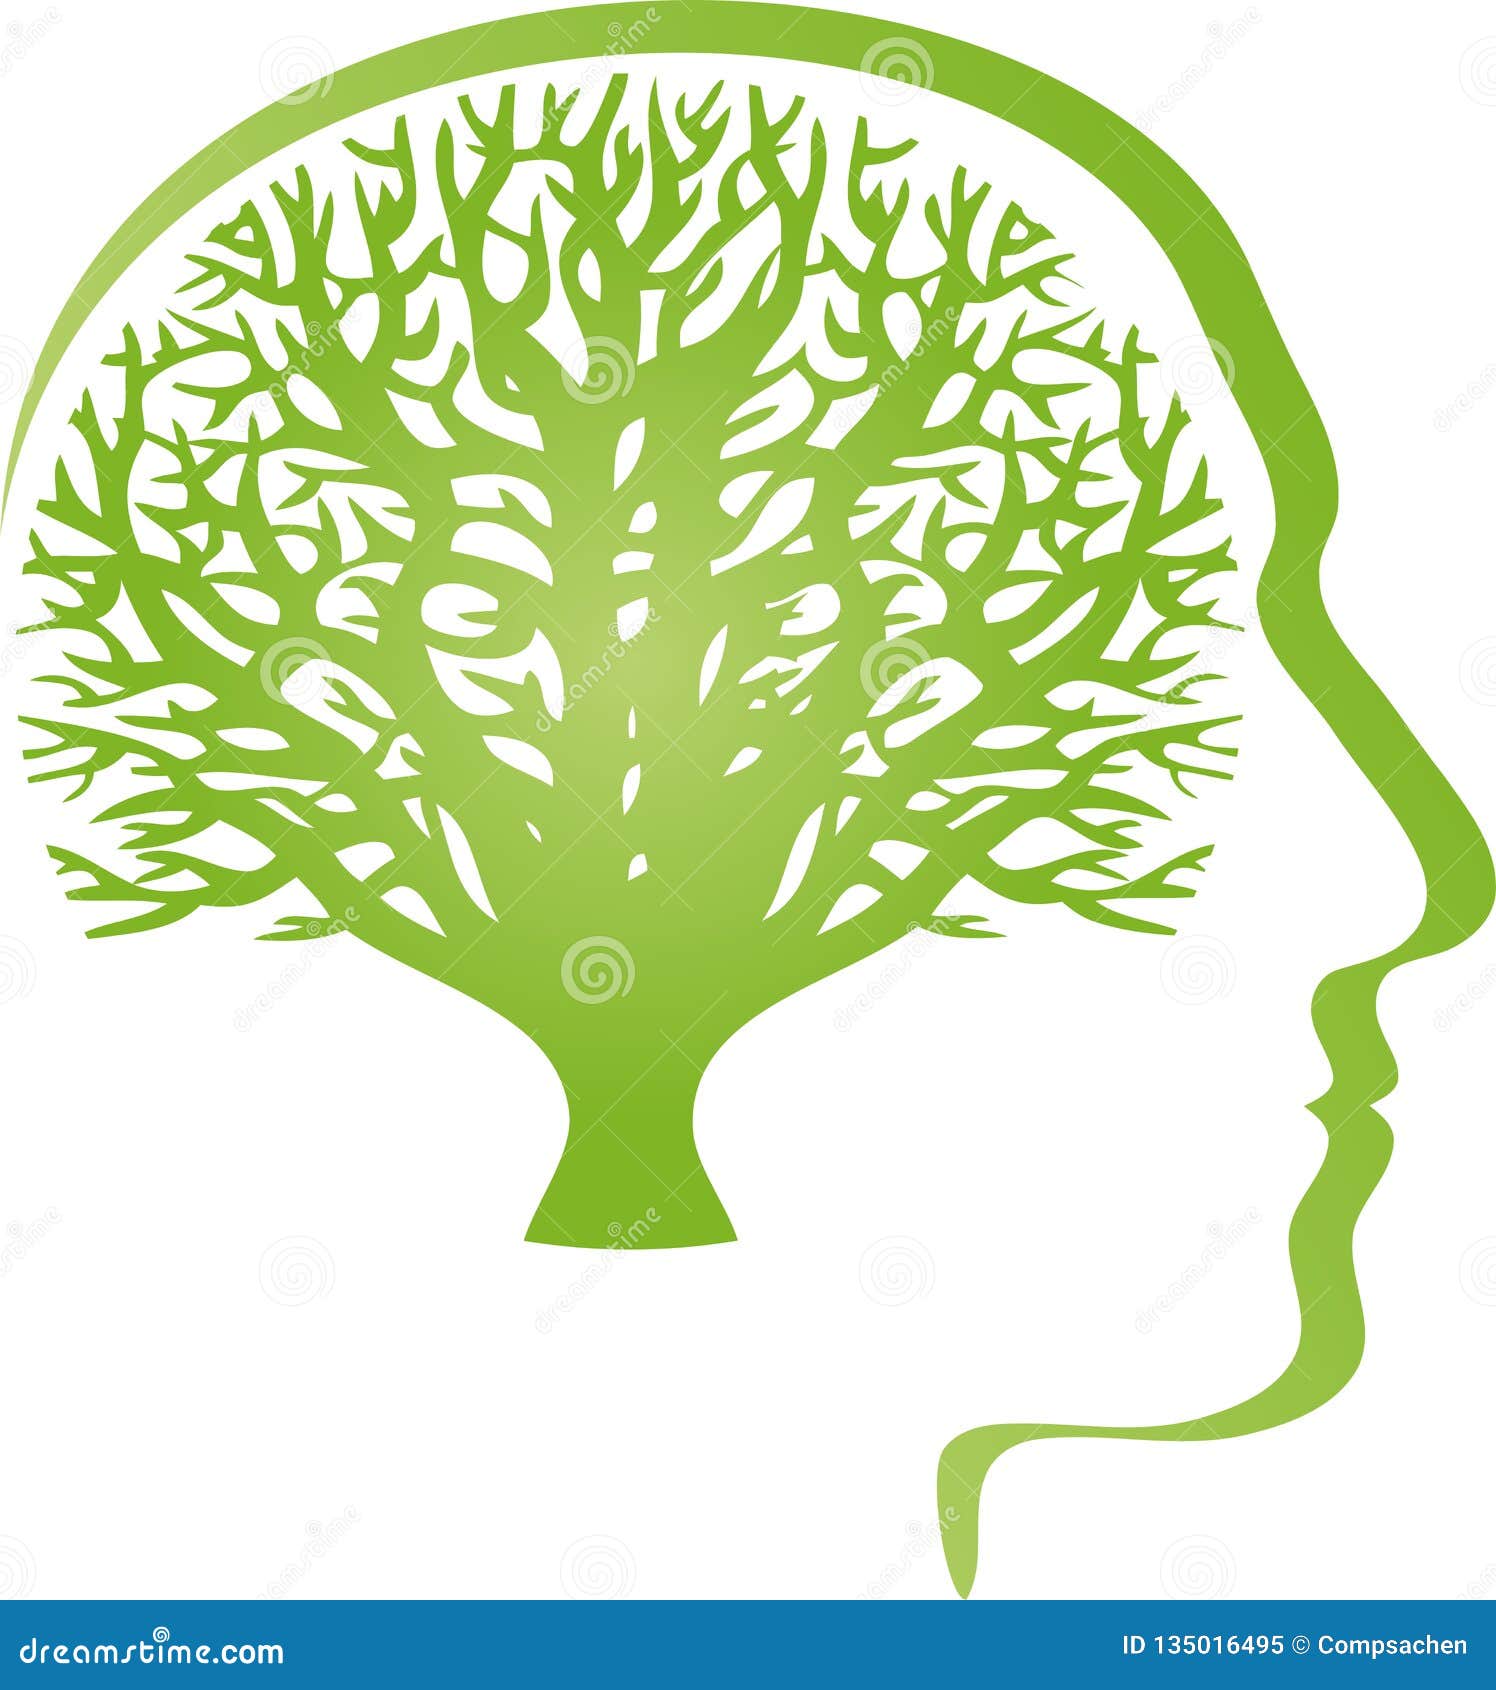 head, face and tree, head and human logo